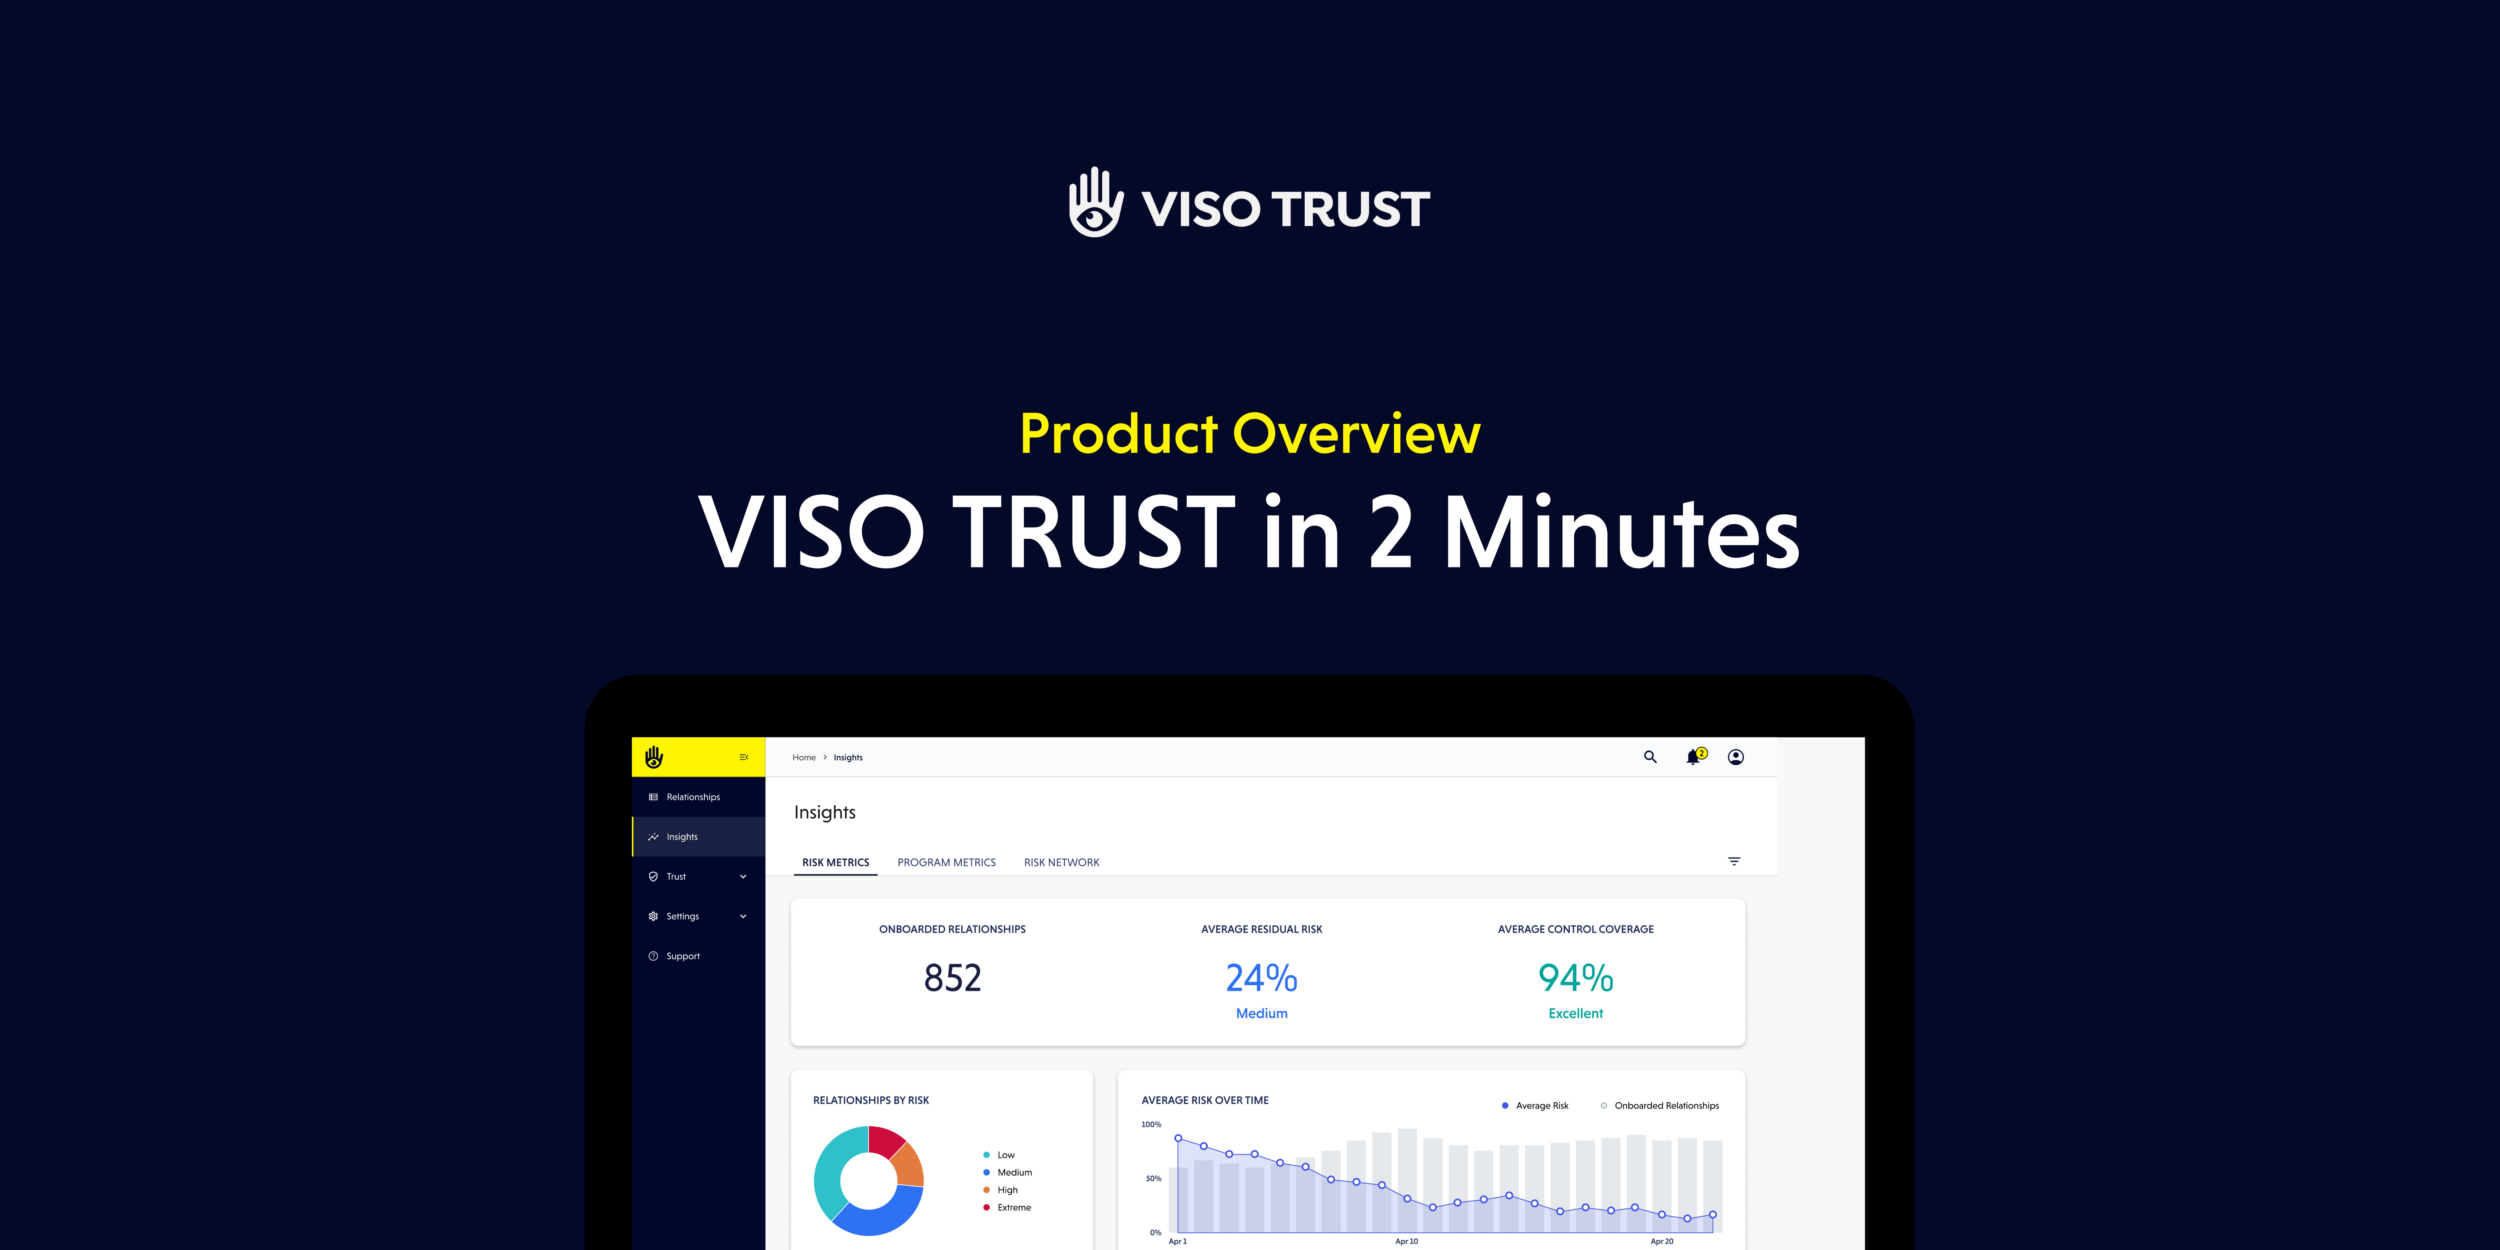 Video: VISO TRUST in 2 Minutes